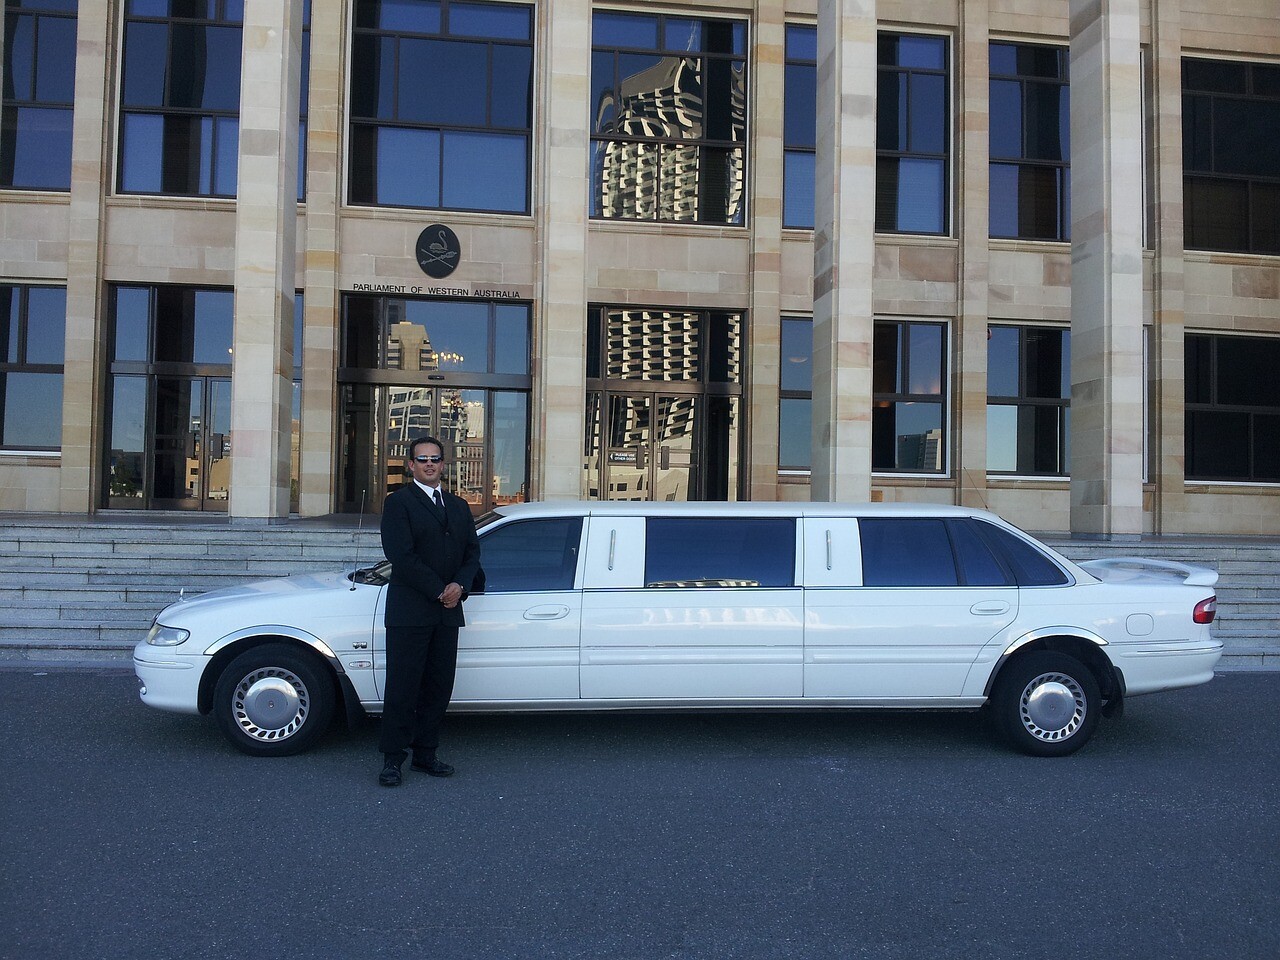 Bryllupskørsel kan foregå i limousine